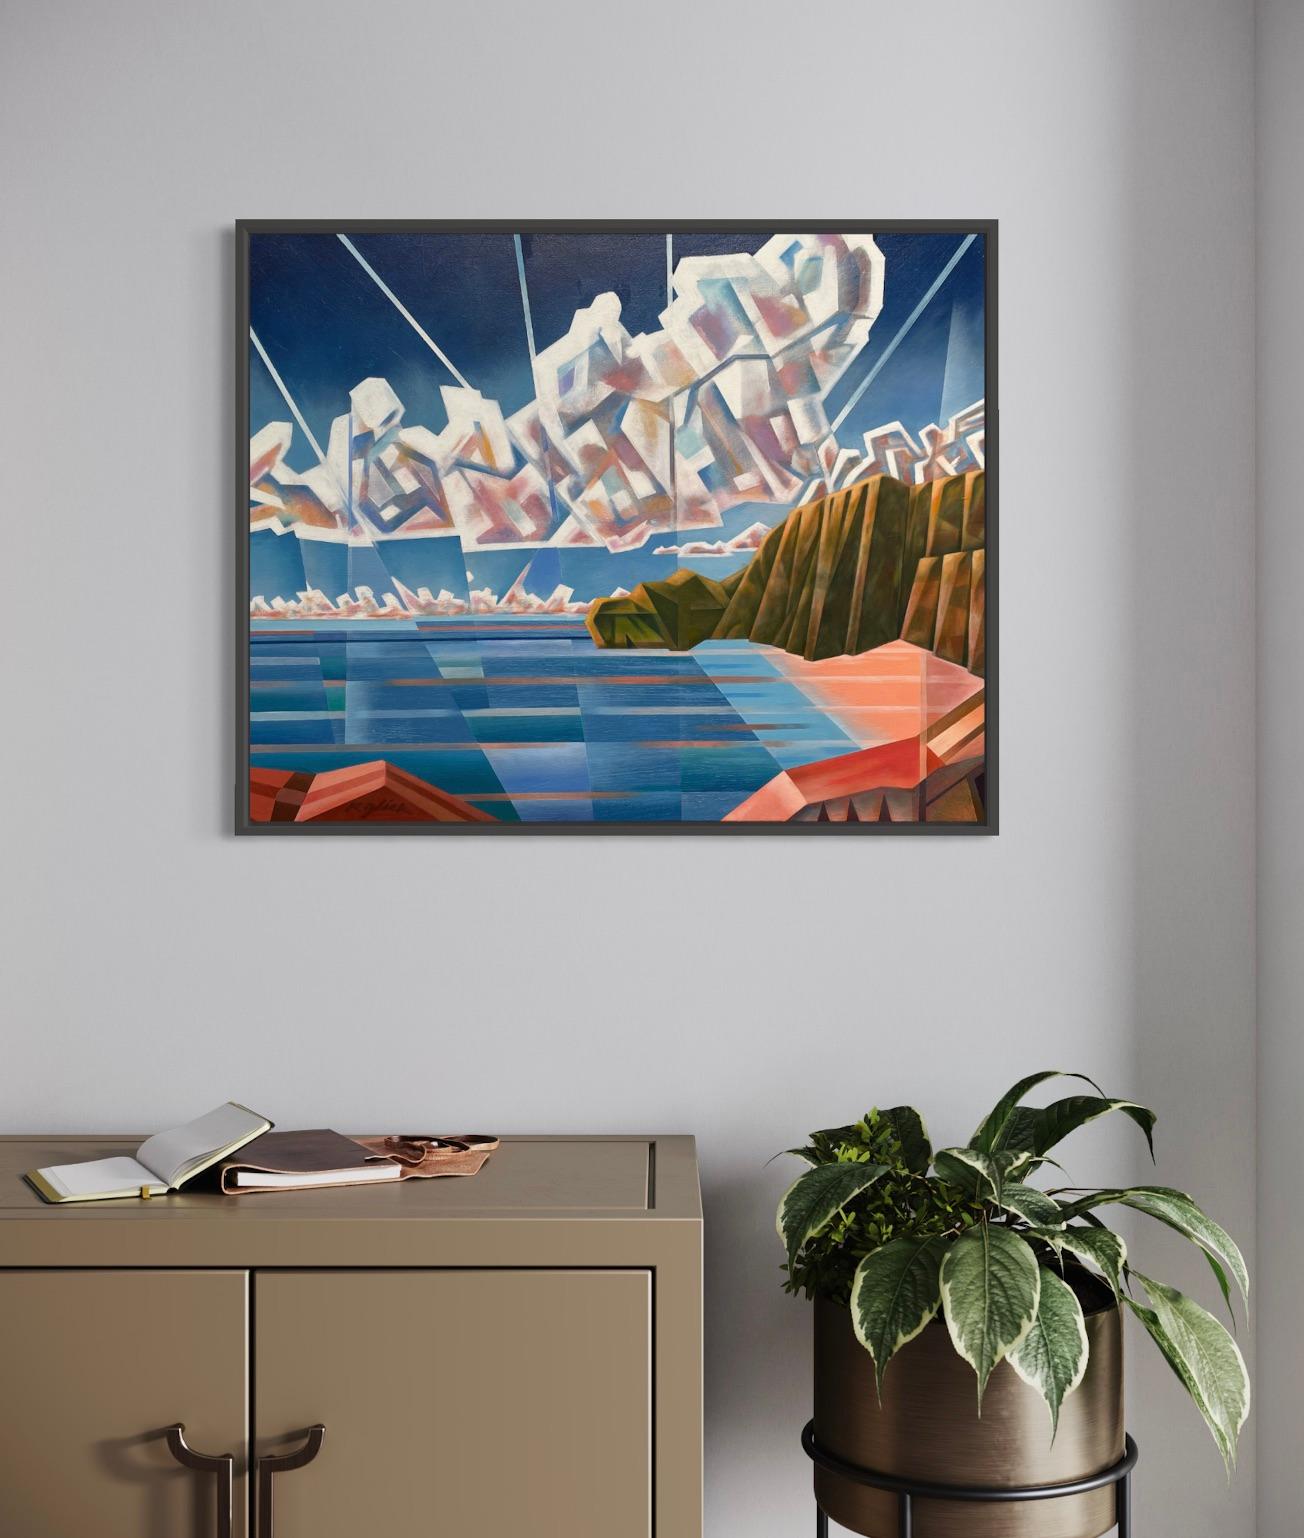 Holiday Cove' par Robert Theck - Paysage marin abstrait vibrant - Cubiste analytique - Painting de Robert Glick